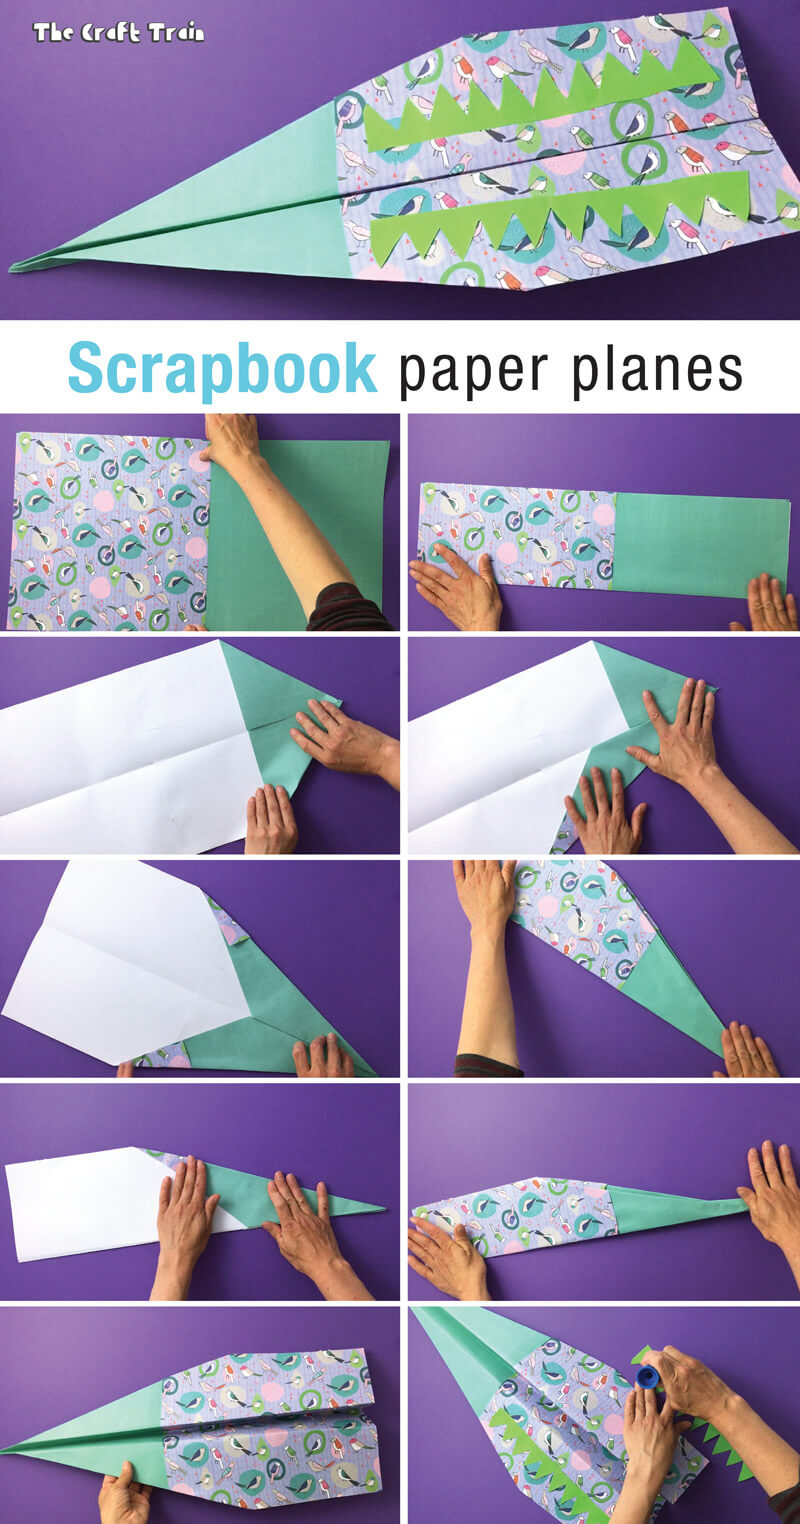 Scrapbook paper plane step-by-step instructions #scrapbookpaper #papercrafts #kidscrafts #STEM #STEAM